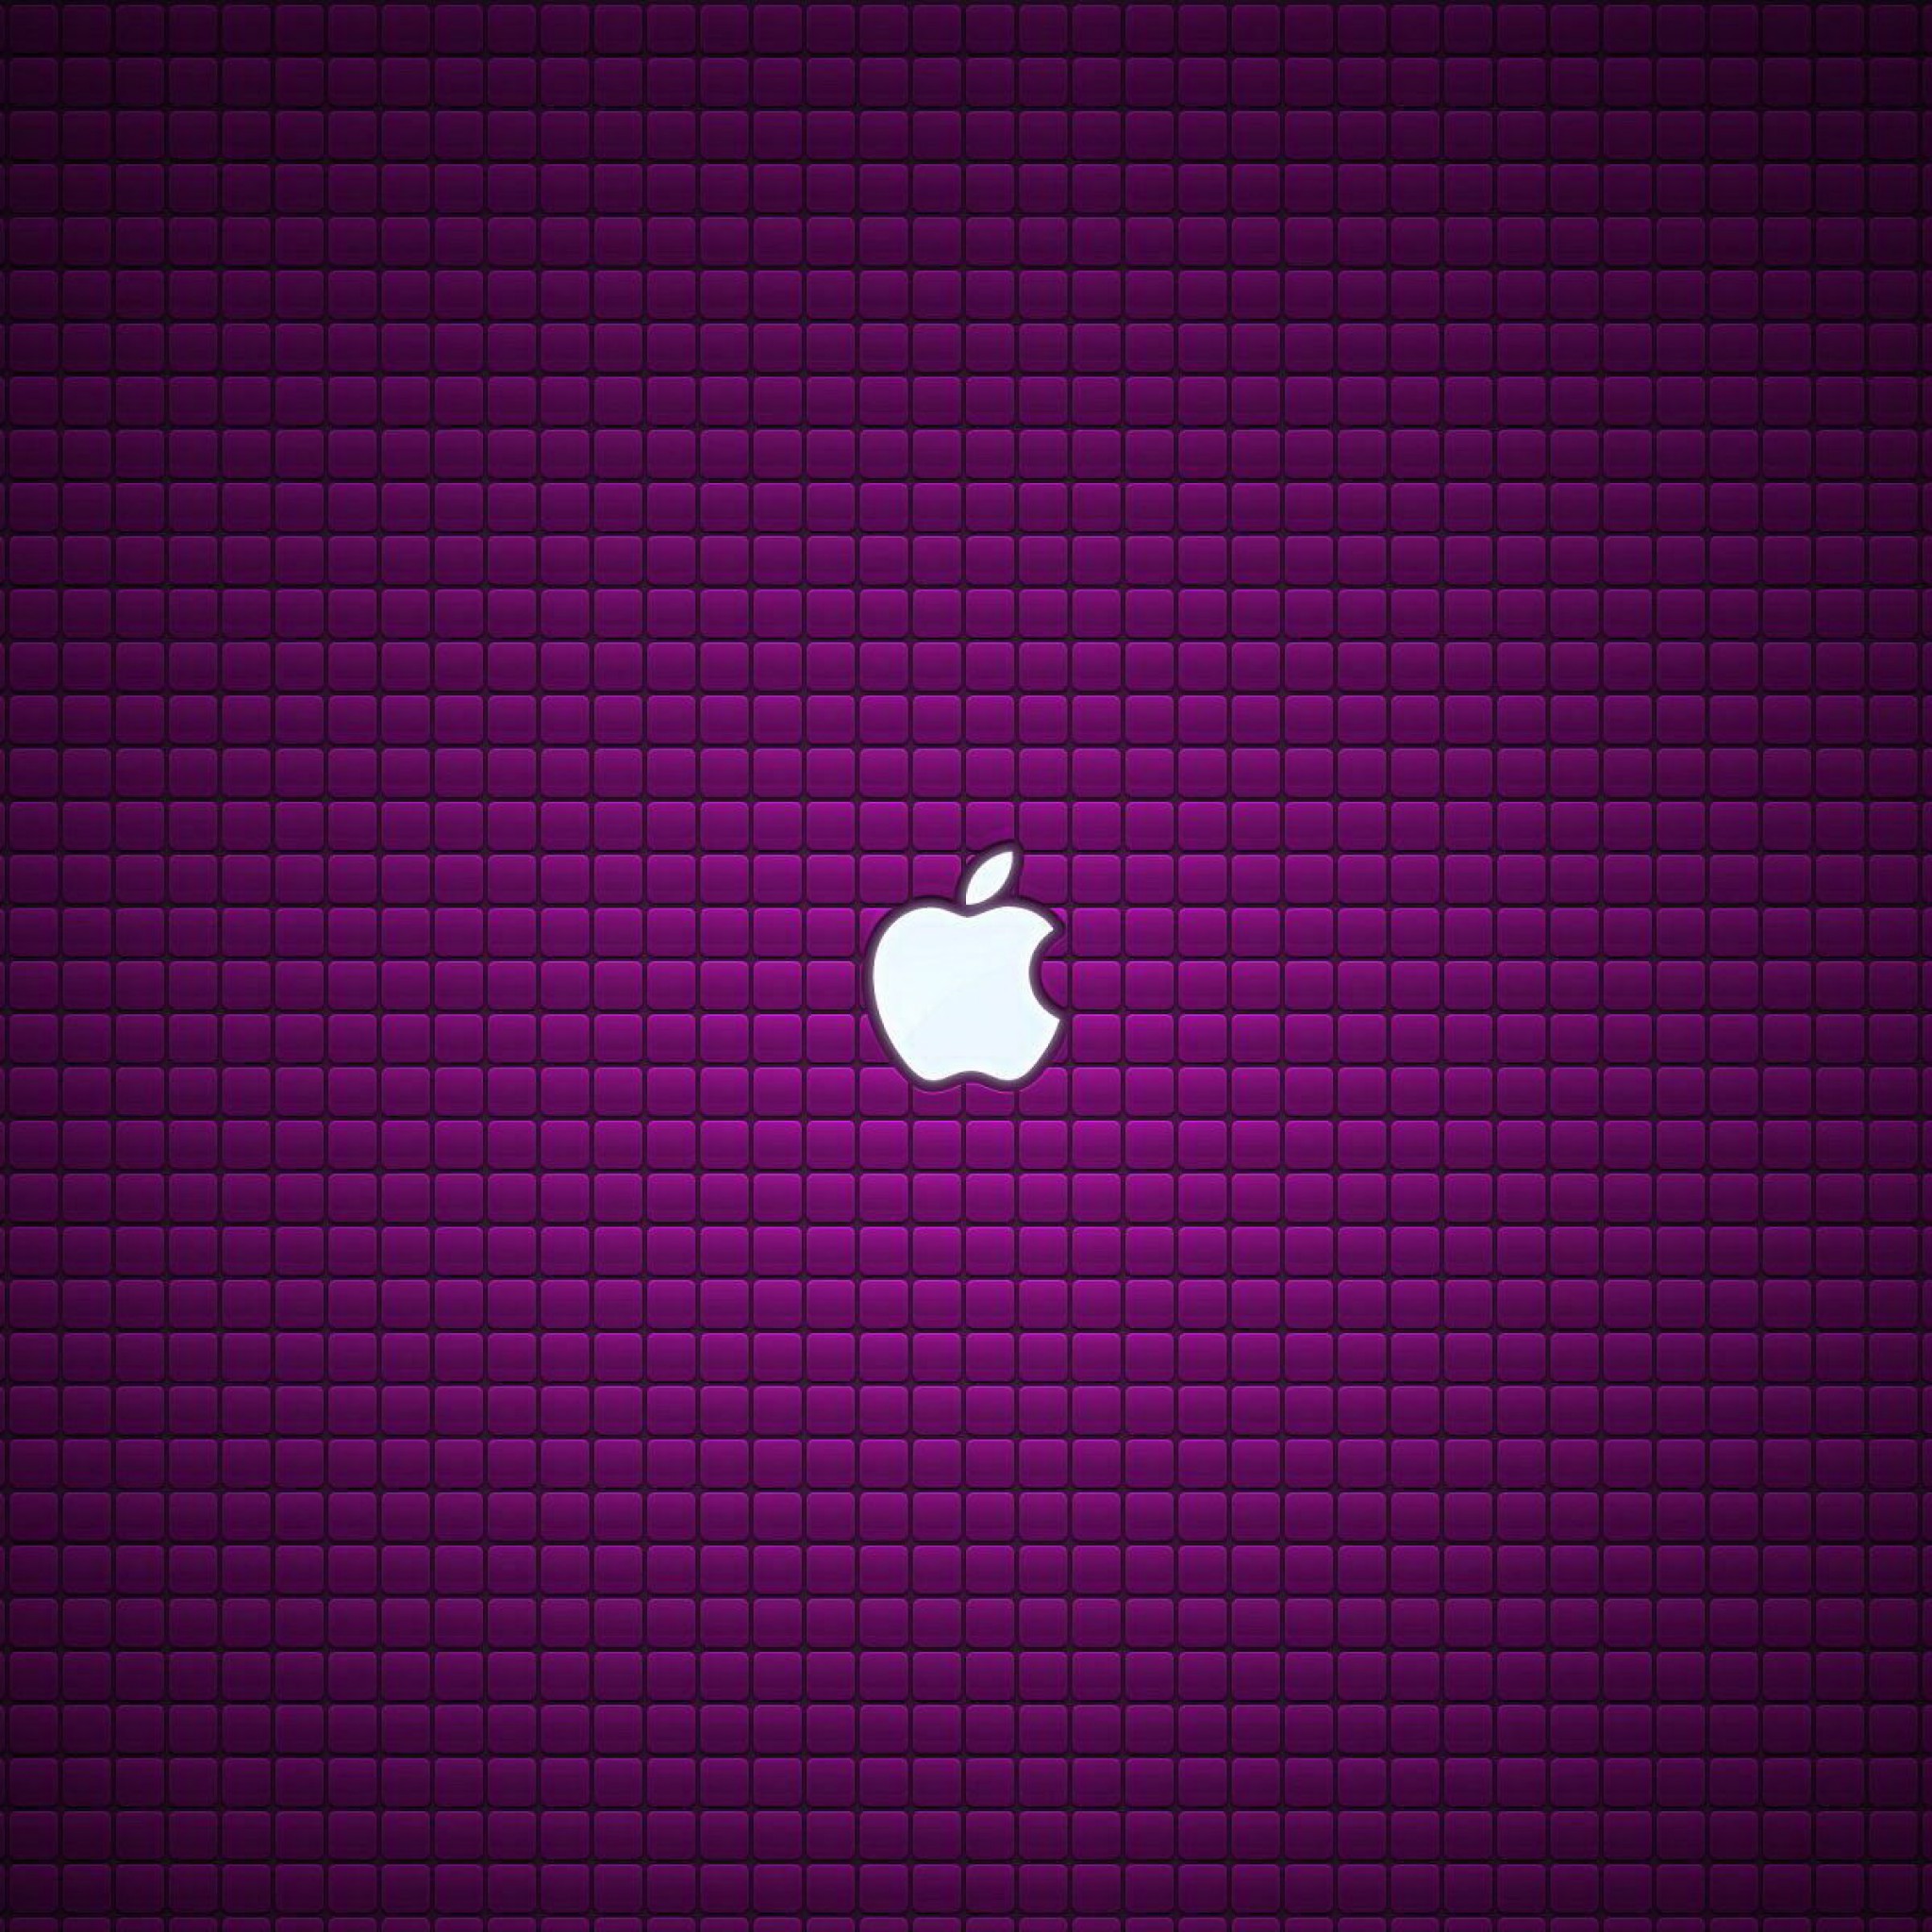 Mac Notebook iPad Air Wallpaper Download iPhone Wallpapers iPad